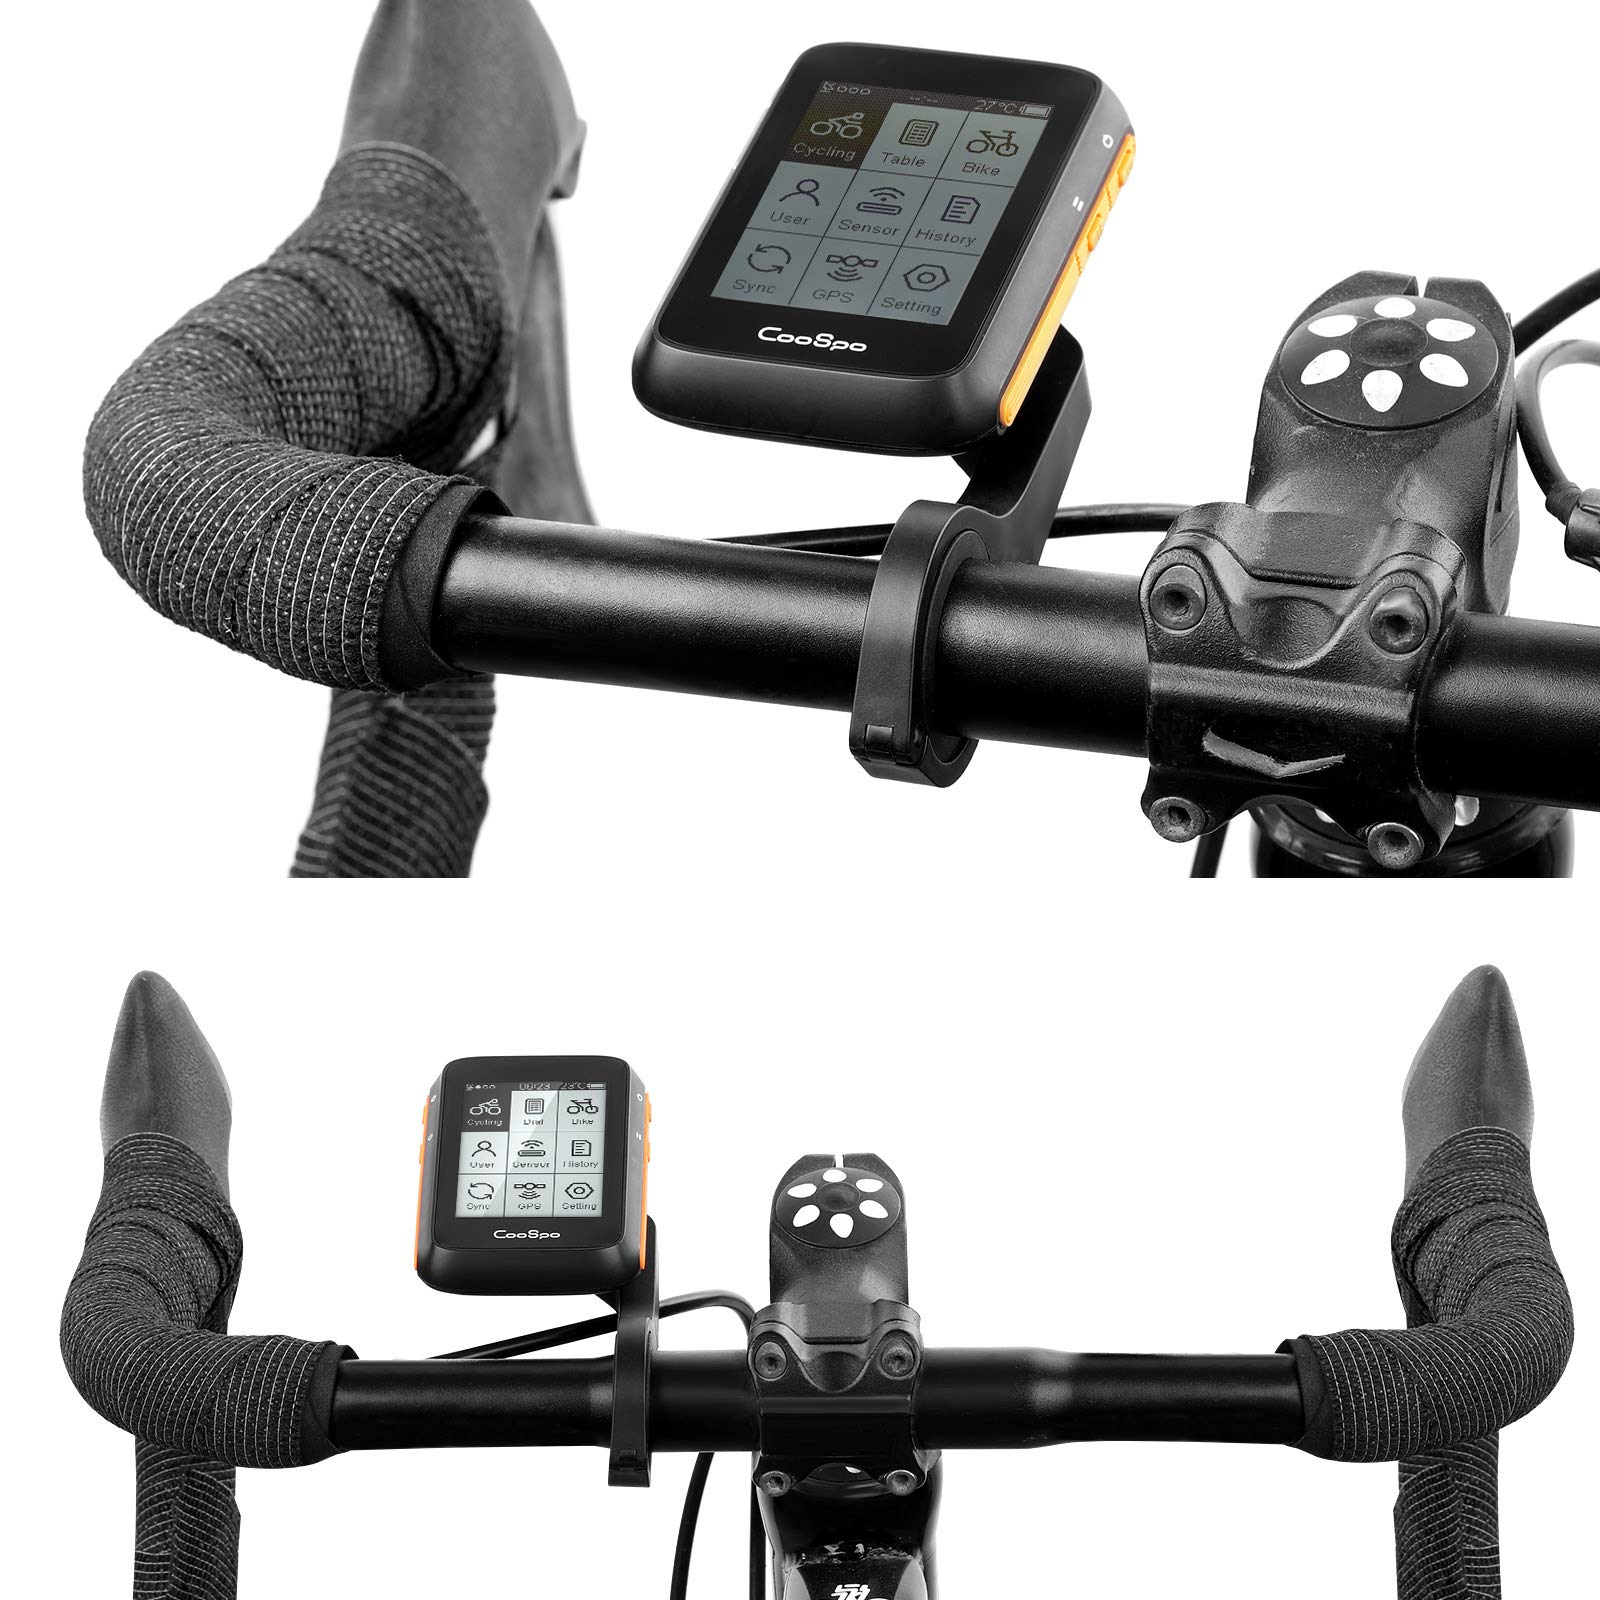 COOSPO GPS Cycling Computer BC107 & Bike Cadence/Speed Sensor BK467 & CooSpo Bike Computer Mount Out-Front Bike Computer Mount